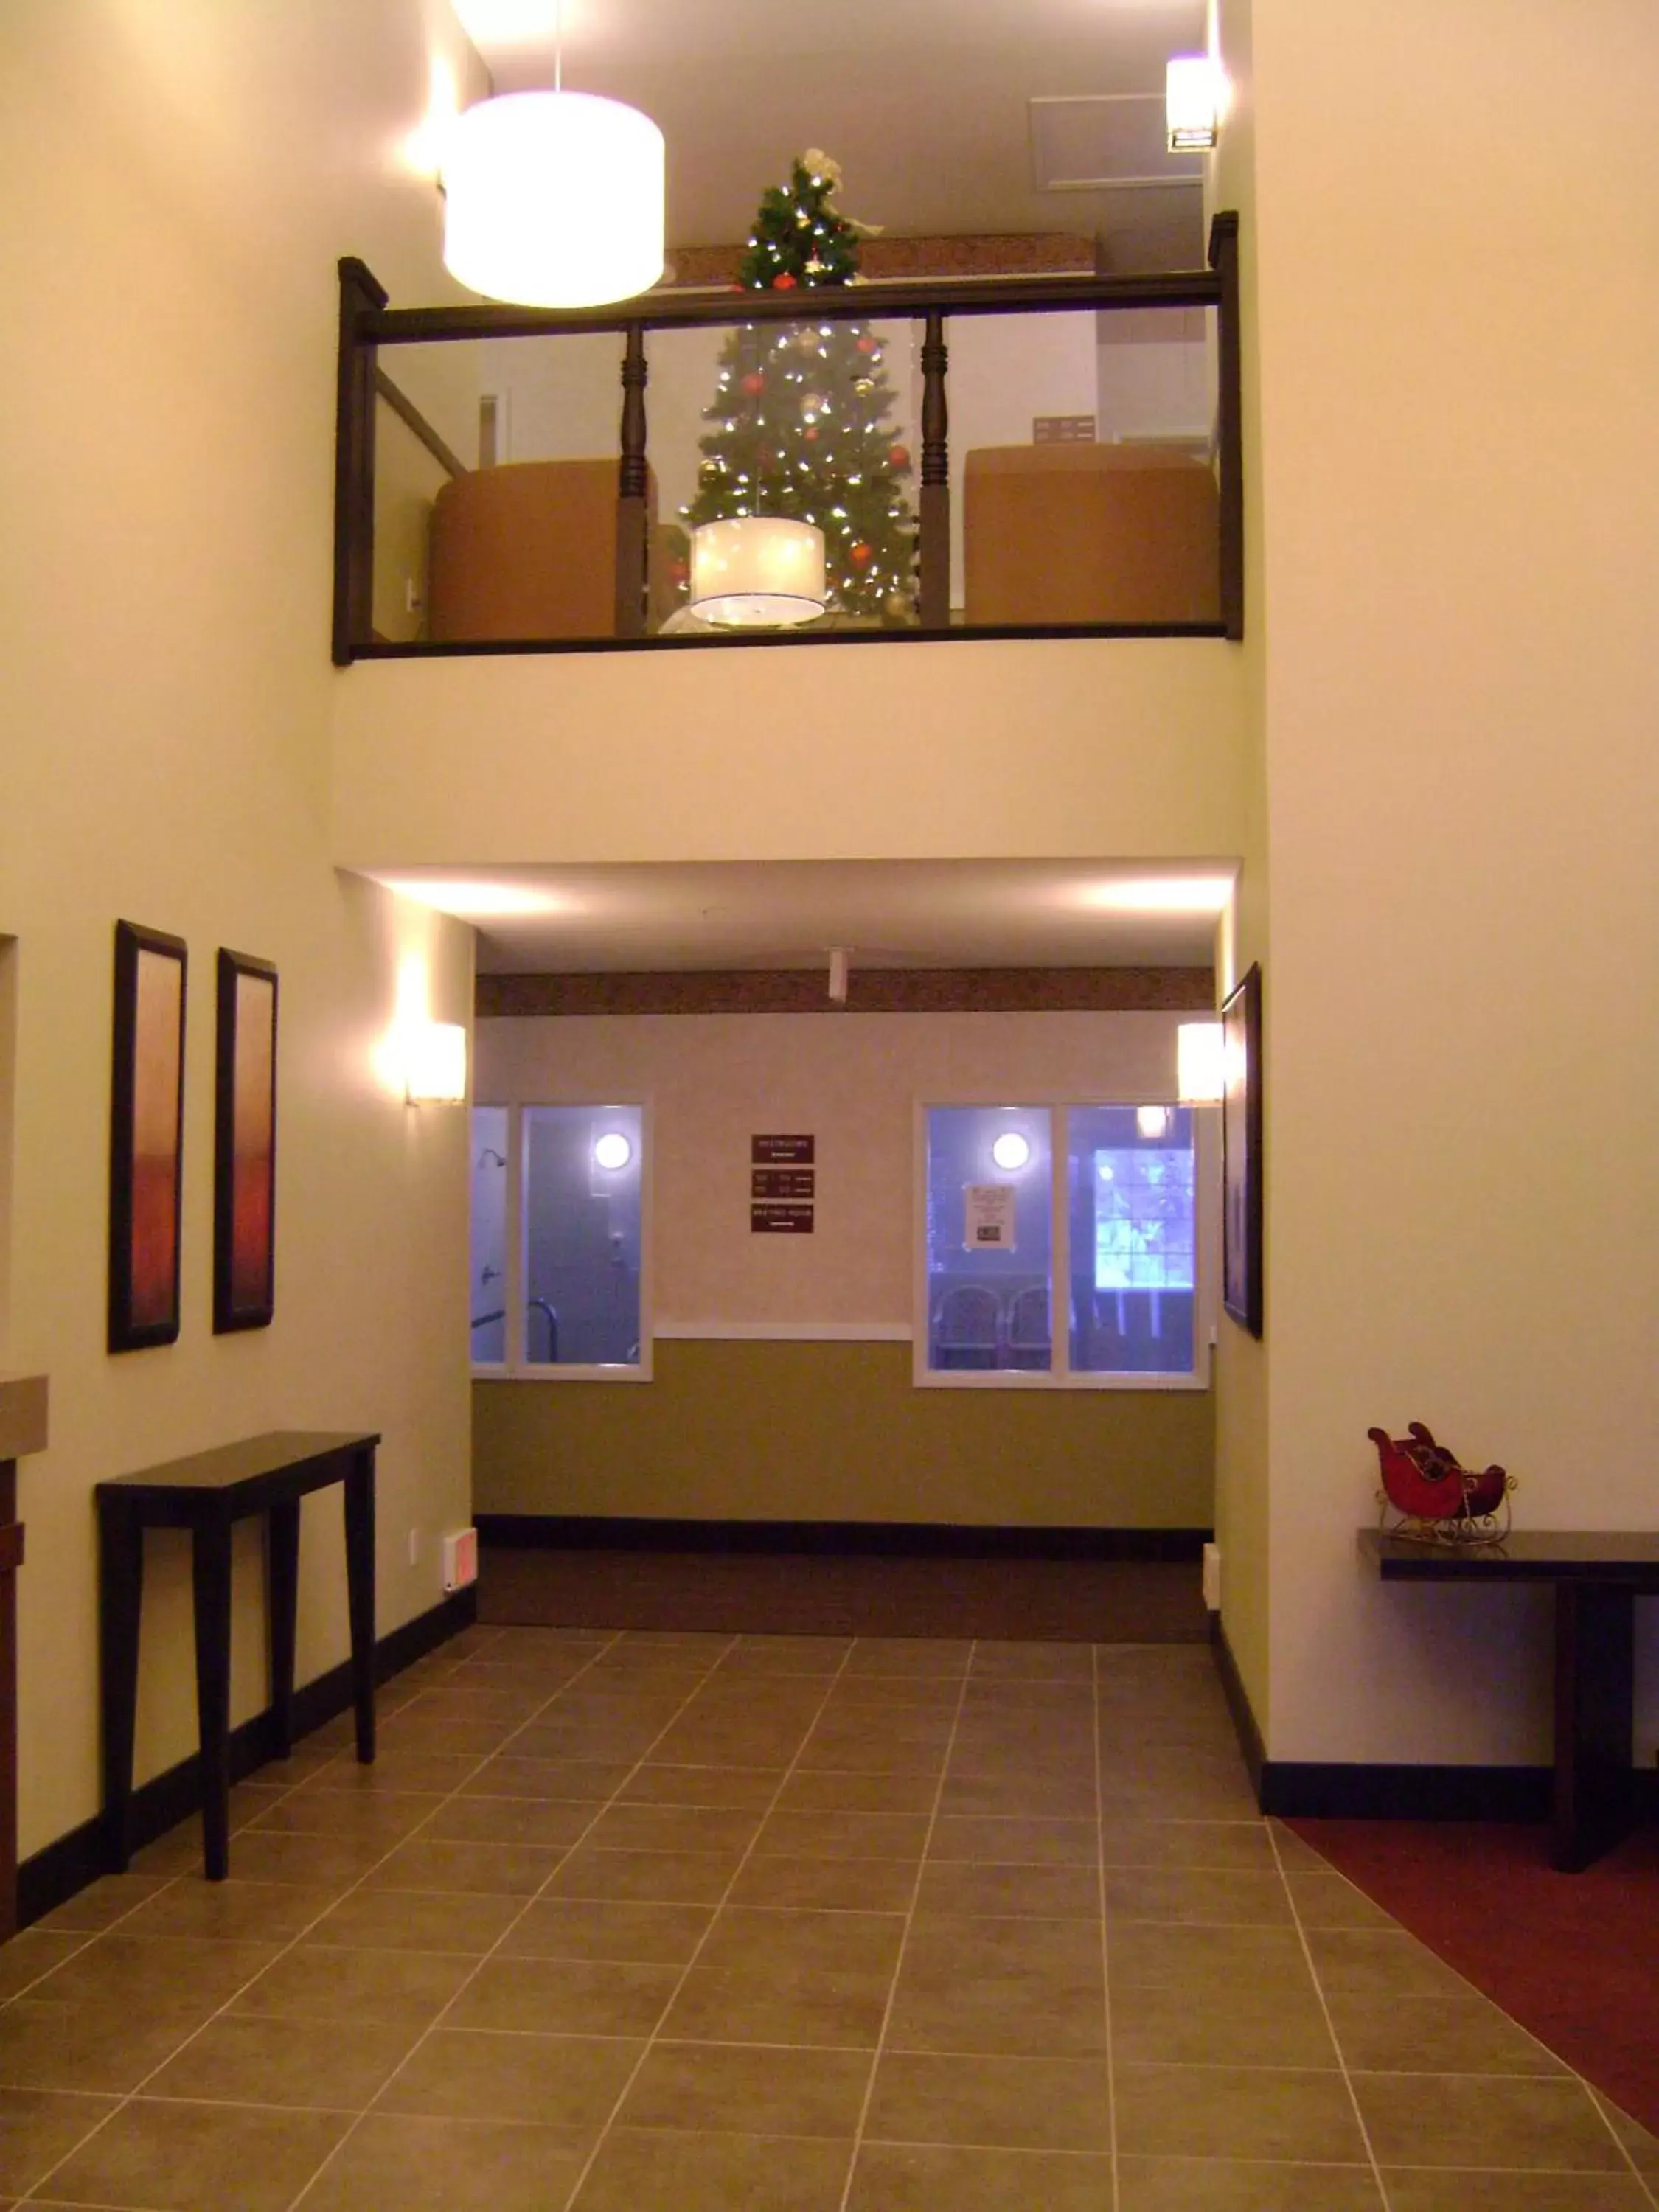 Lobby or reception in Aspen Hotel